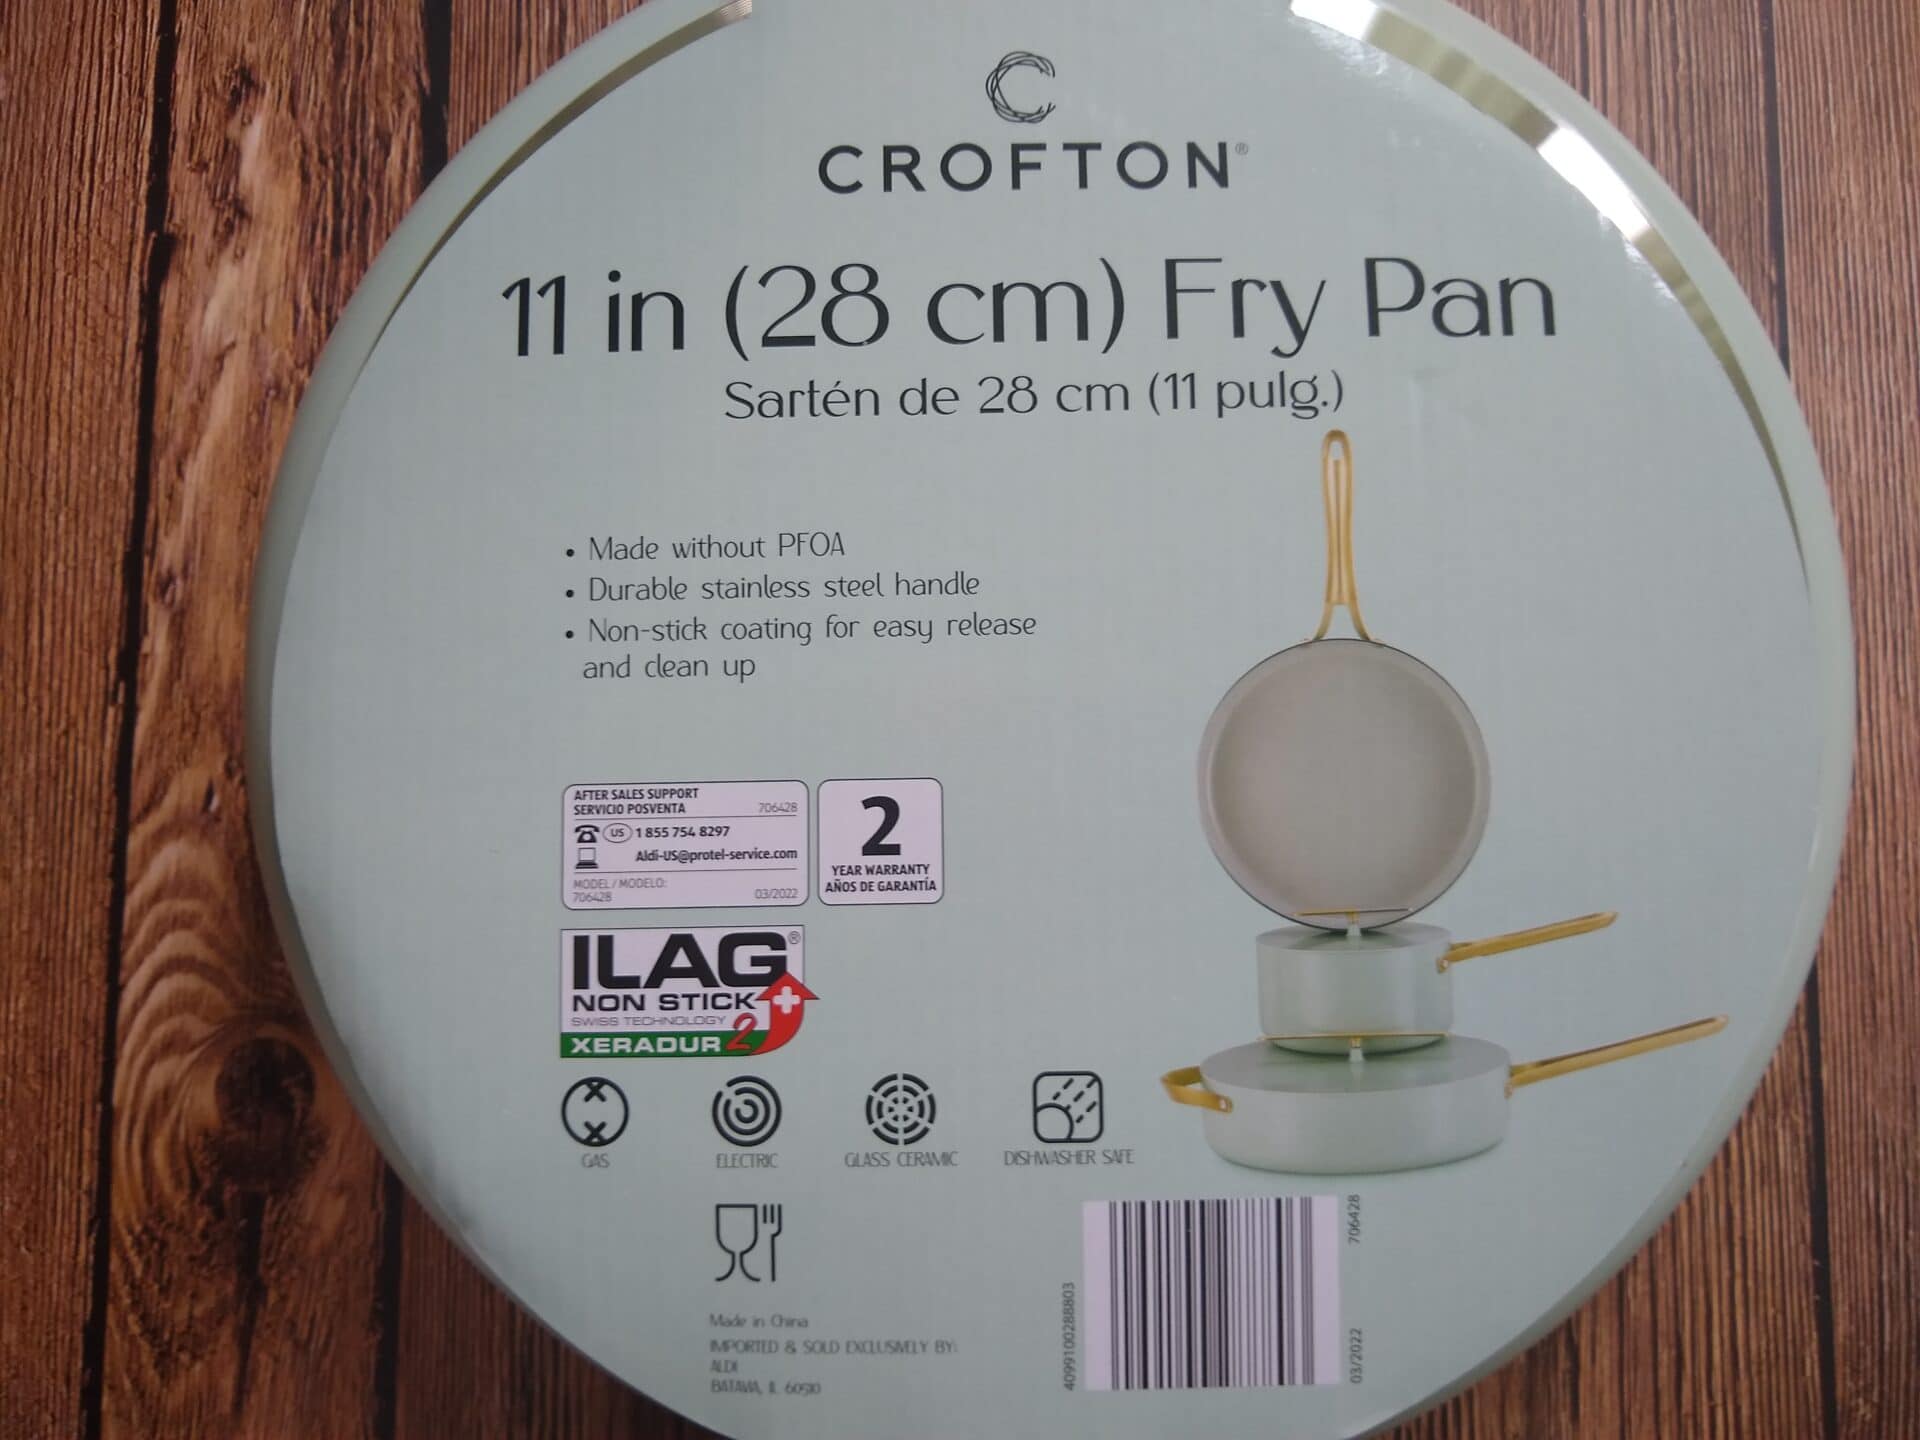 Crofton Fry Pan and Sauté Pan With Lid -- Imitations of Caraway Pans --  Headed to Aldi